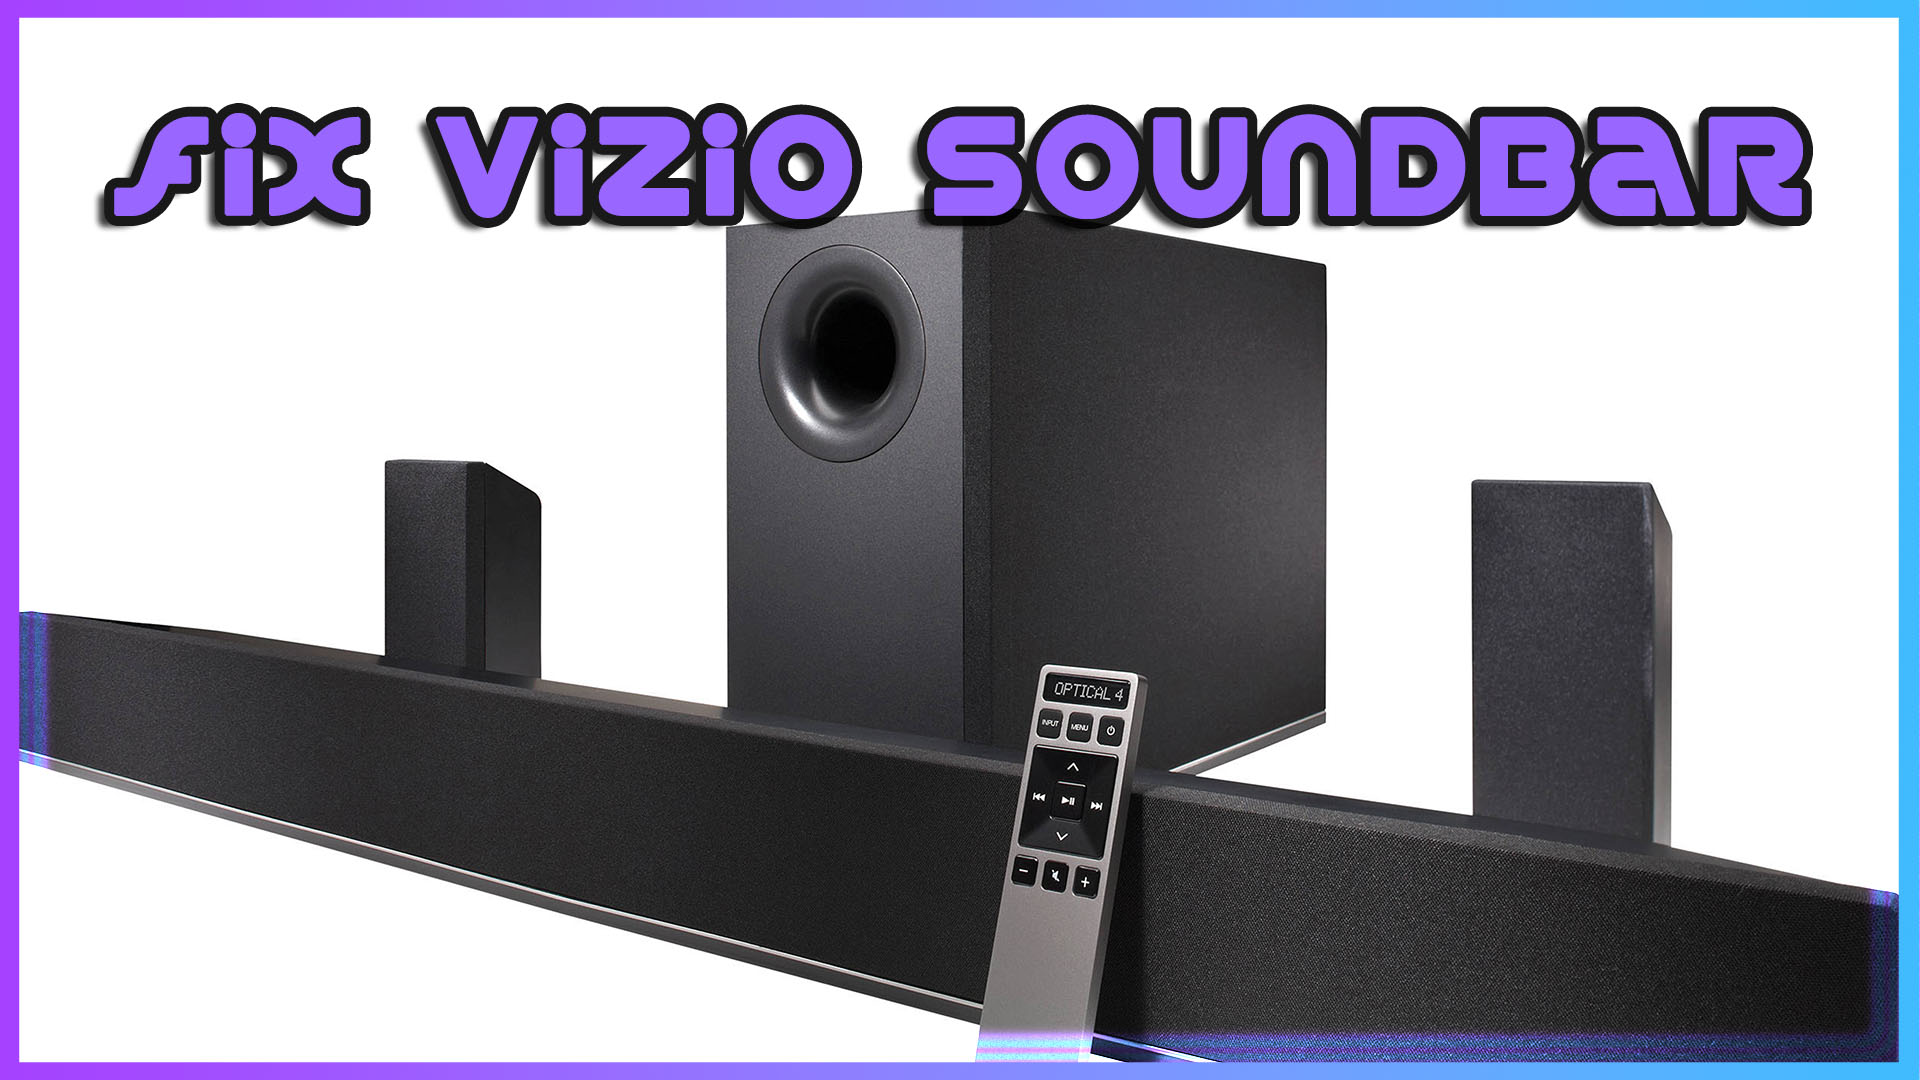 Repair Vizio Soundbar - Video